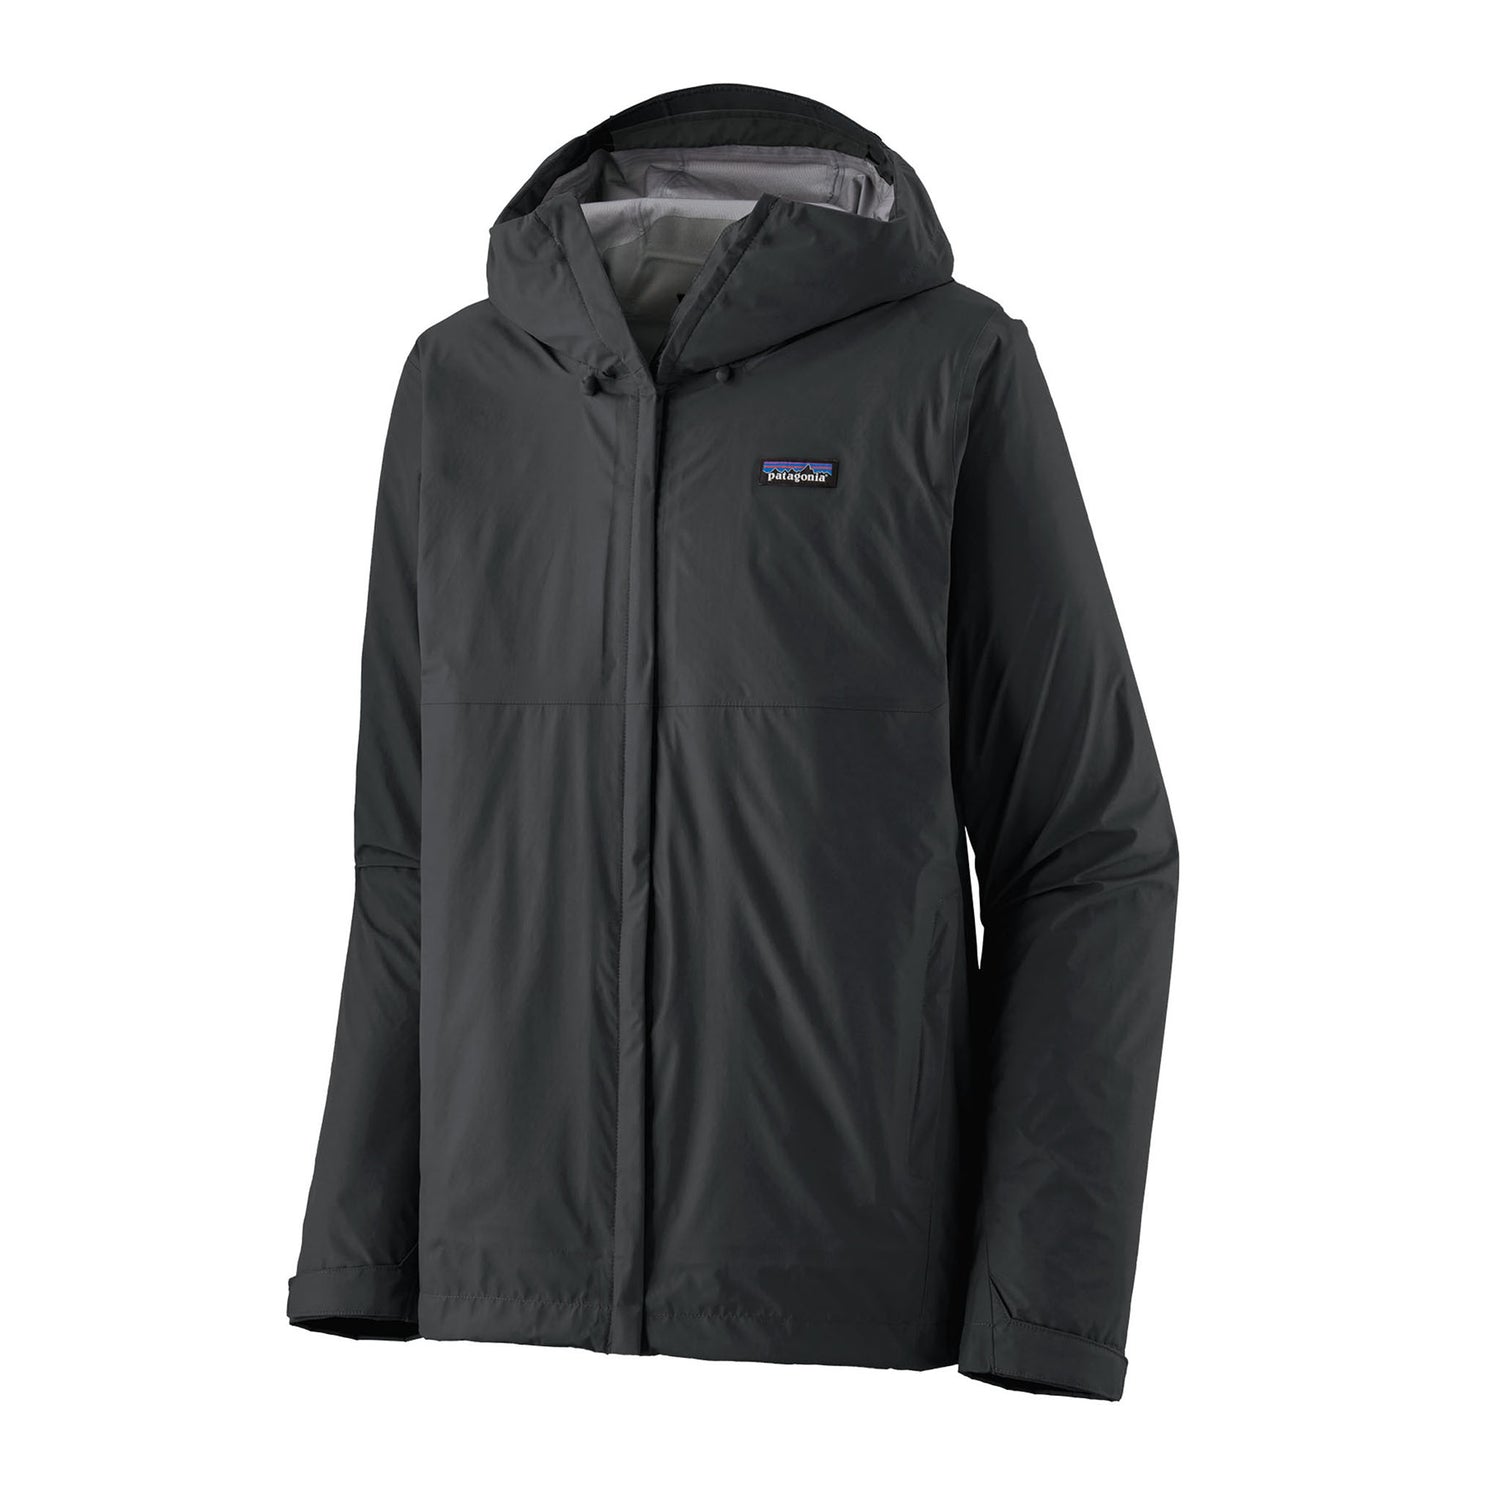 Men's Patagonia Torrentshell 3L jacket in black